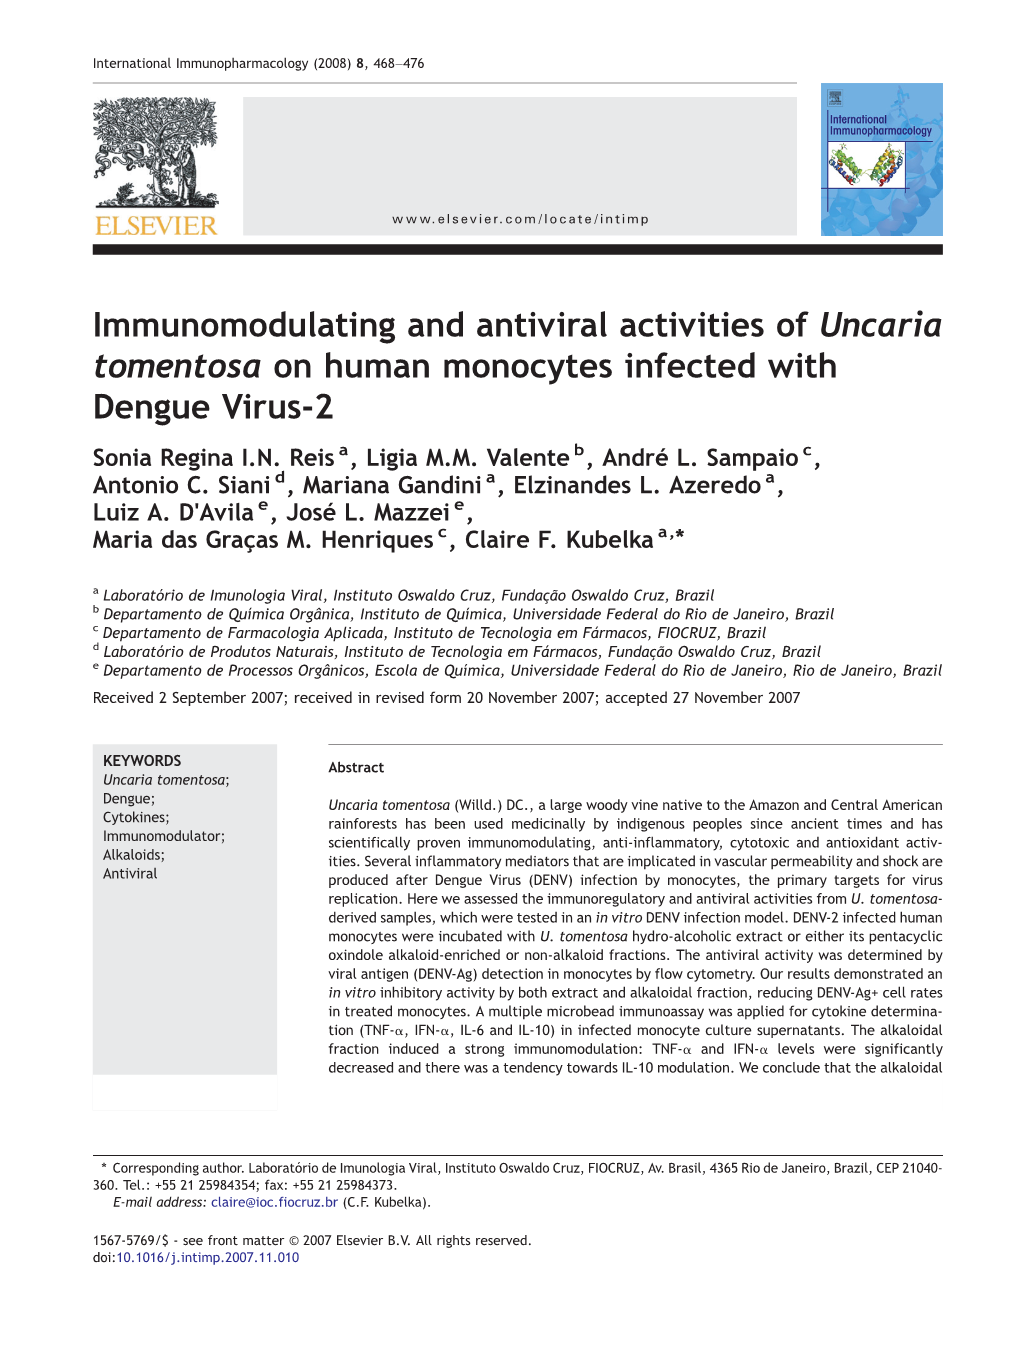 Immunomodulating and Antiviral Activities of Uncaria Tomentosa on Human Monocytes Infected with Dengue Virus-2 Sonia Regina I.N